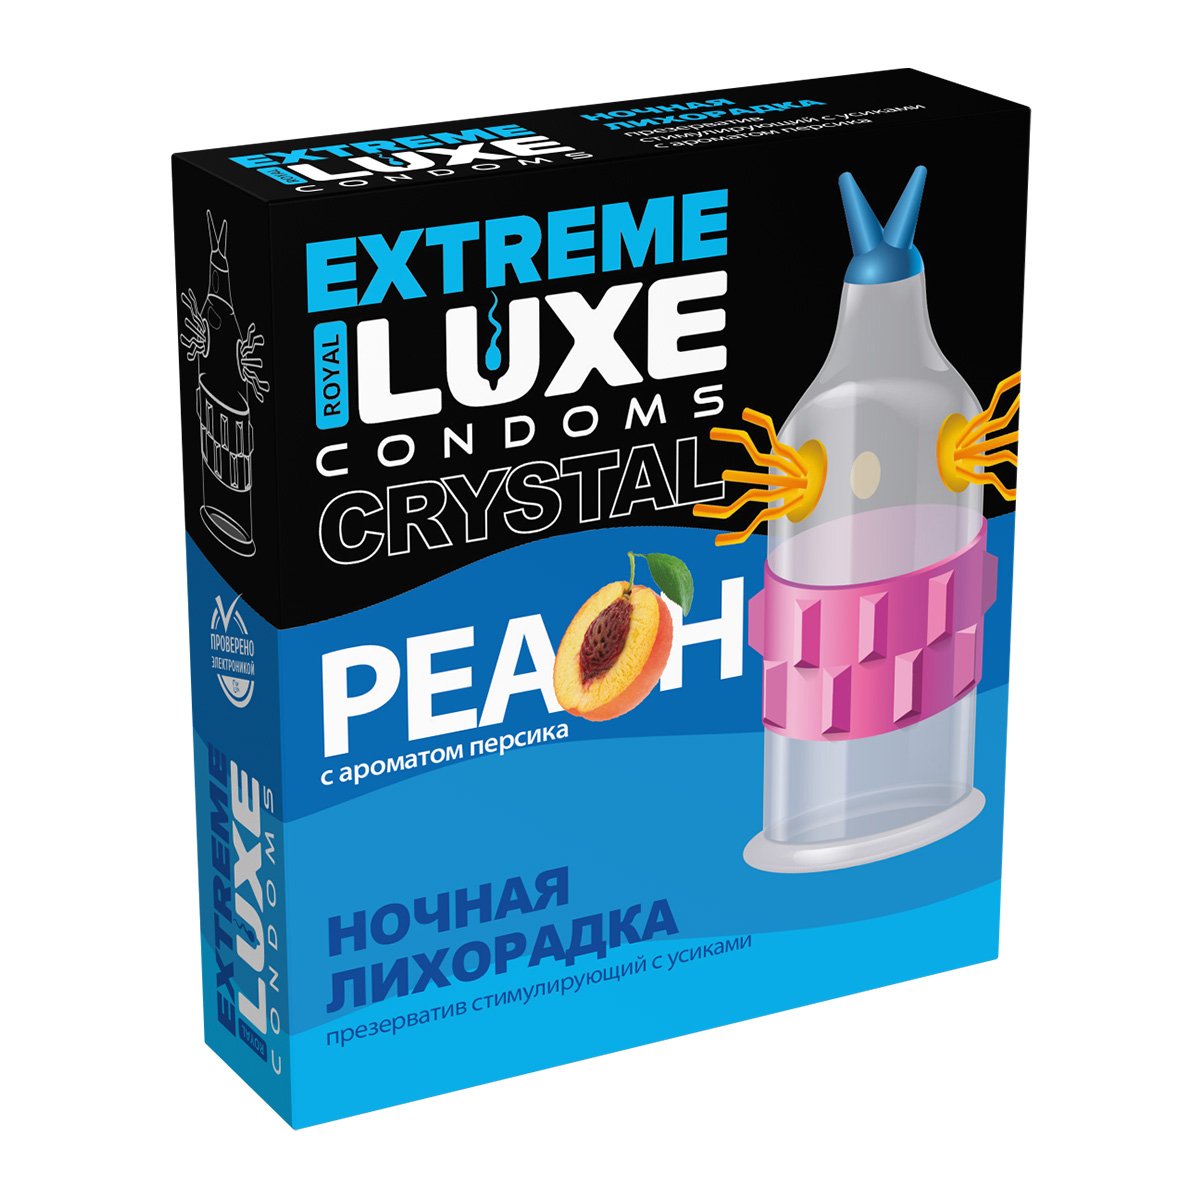 LUXE EXTREME НОЧНАЯ ЛИХОРАДКА - Презерватив с ароматом персика, 1 шт (прозрачный)